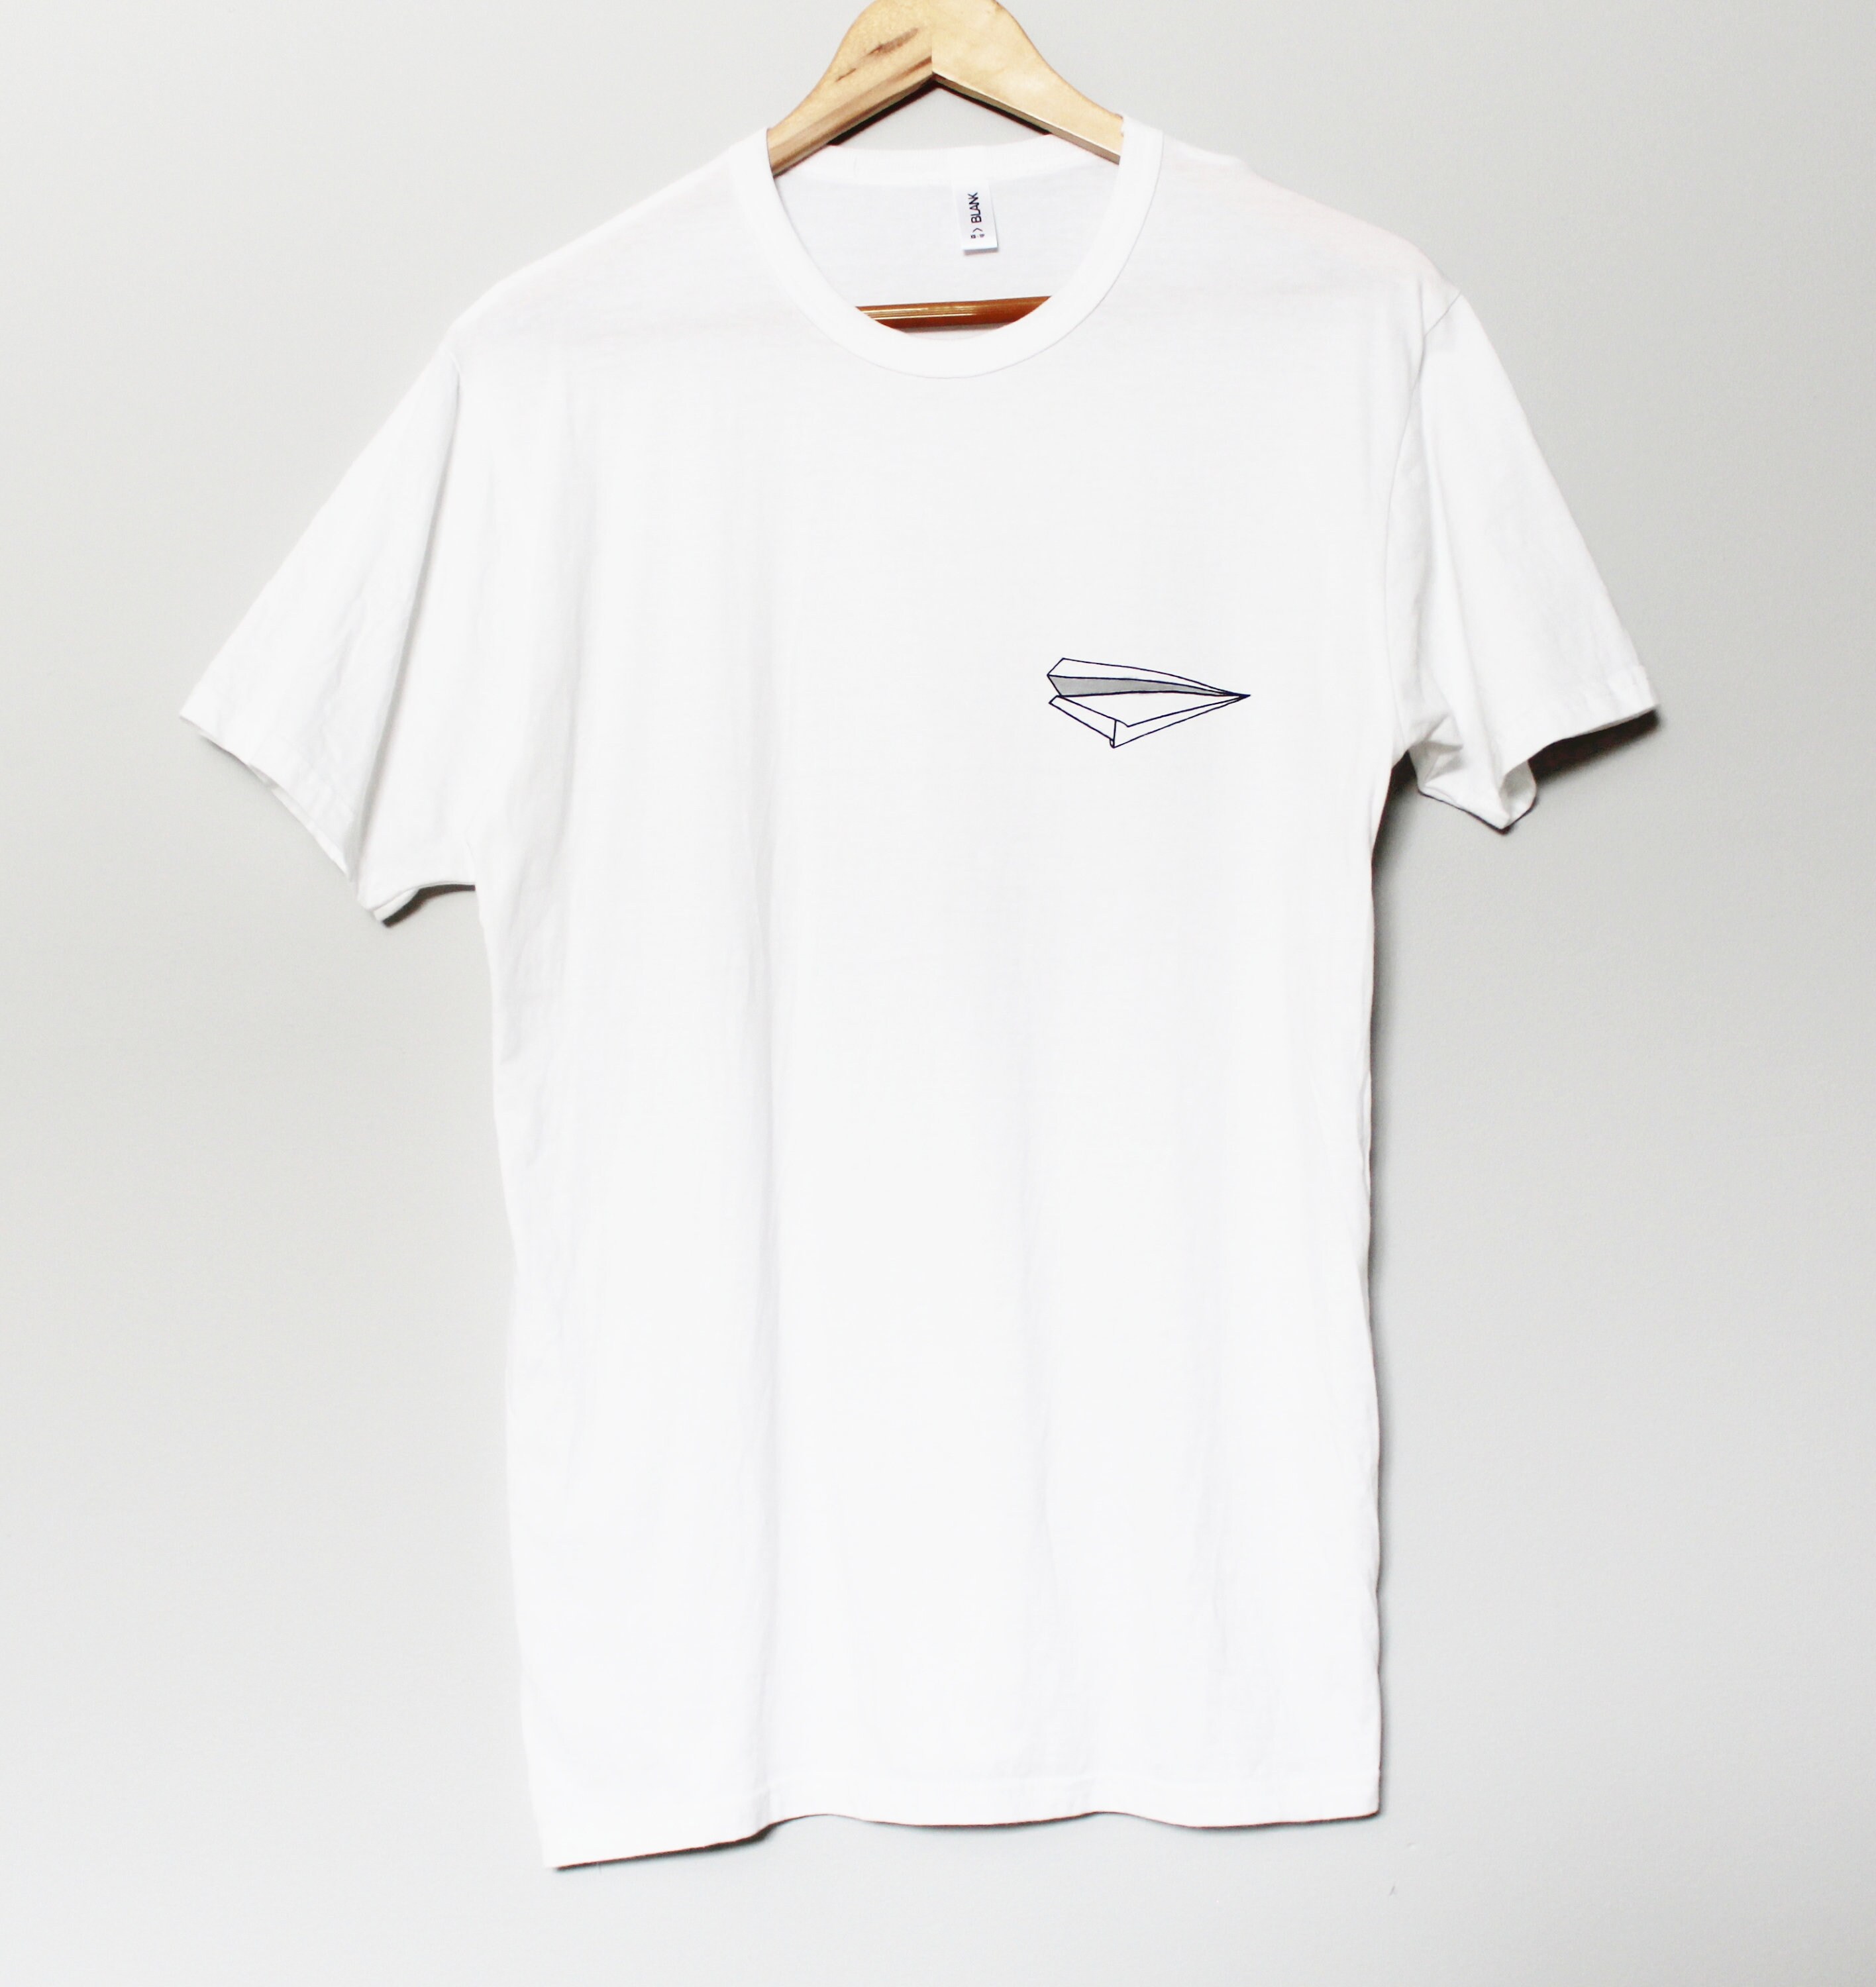 Paper Plane Perspectives Design T-shirt